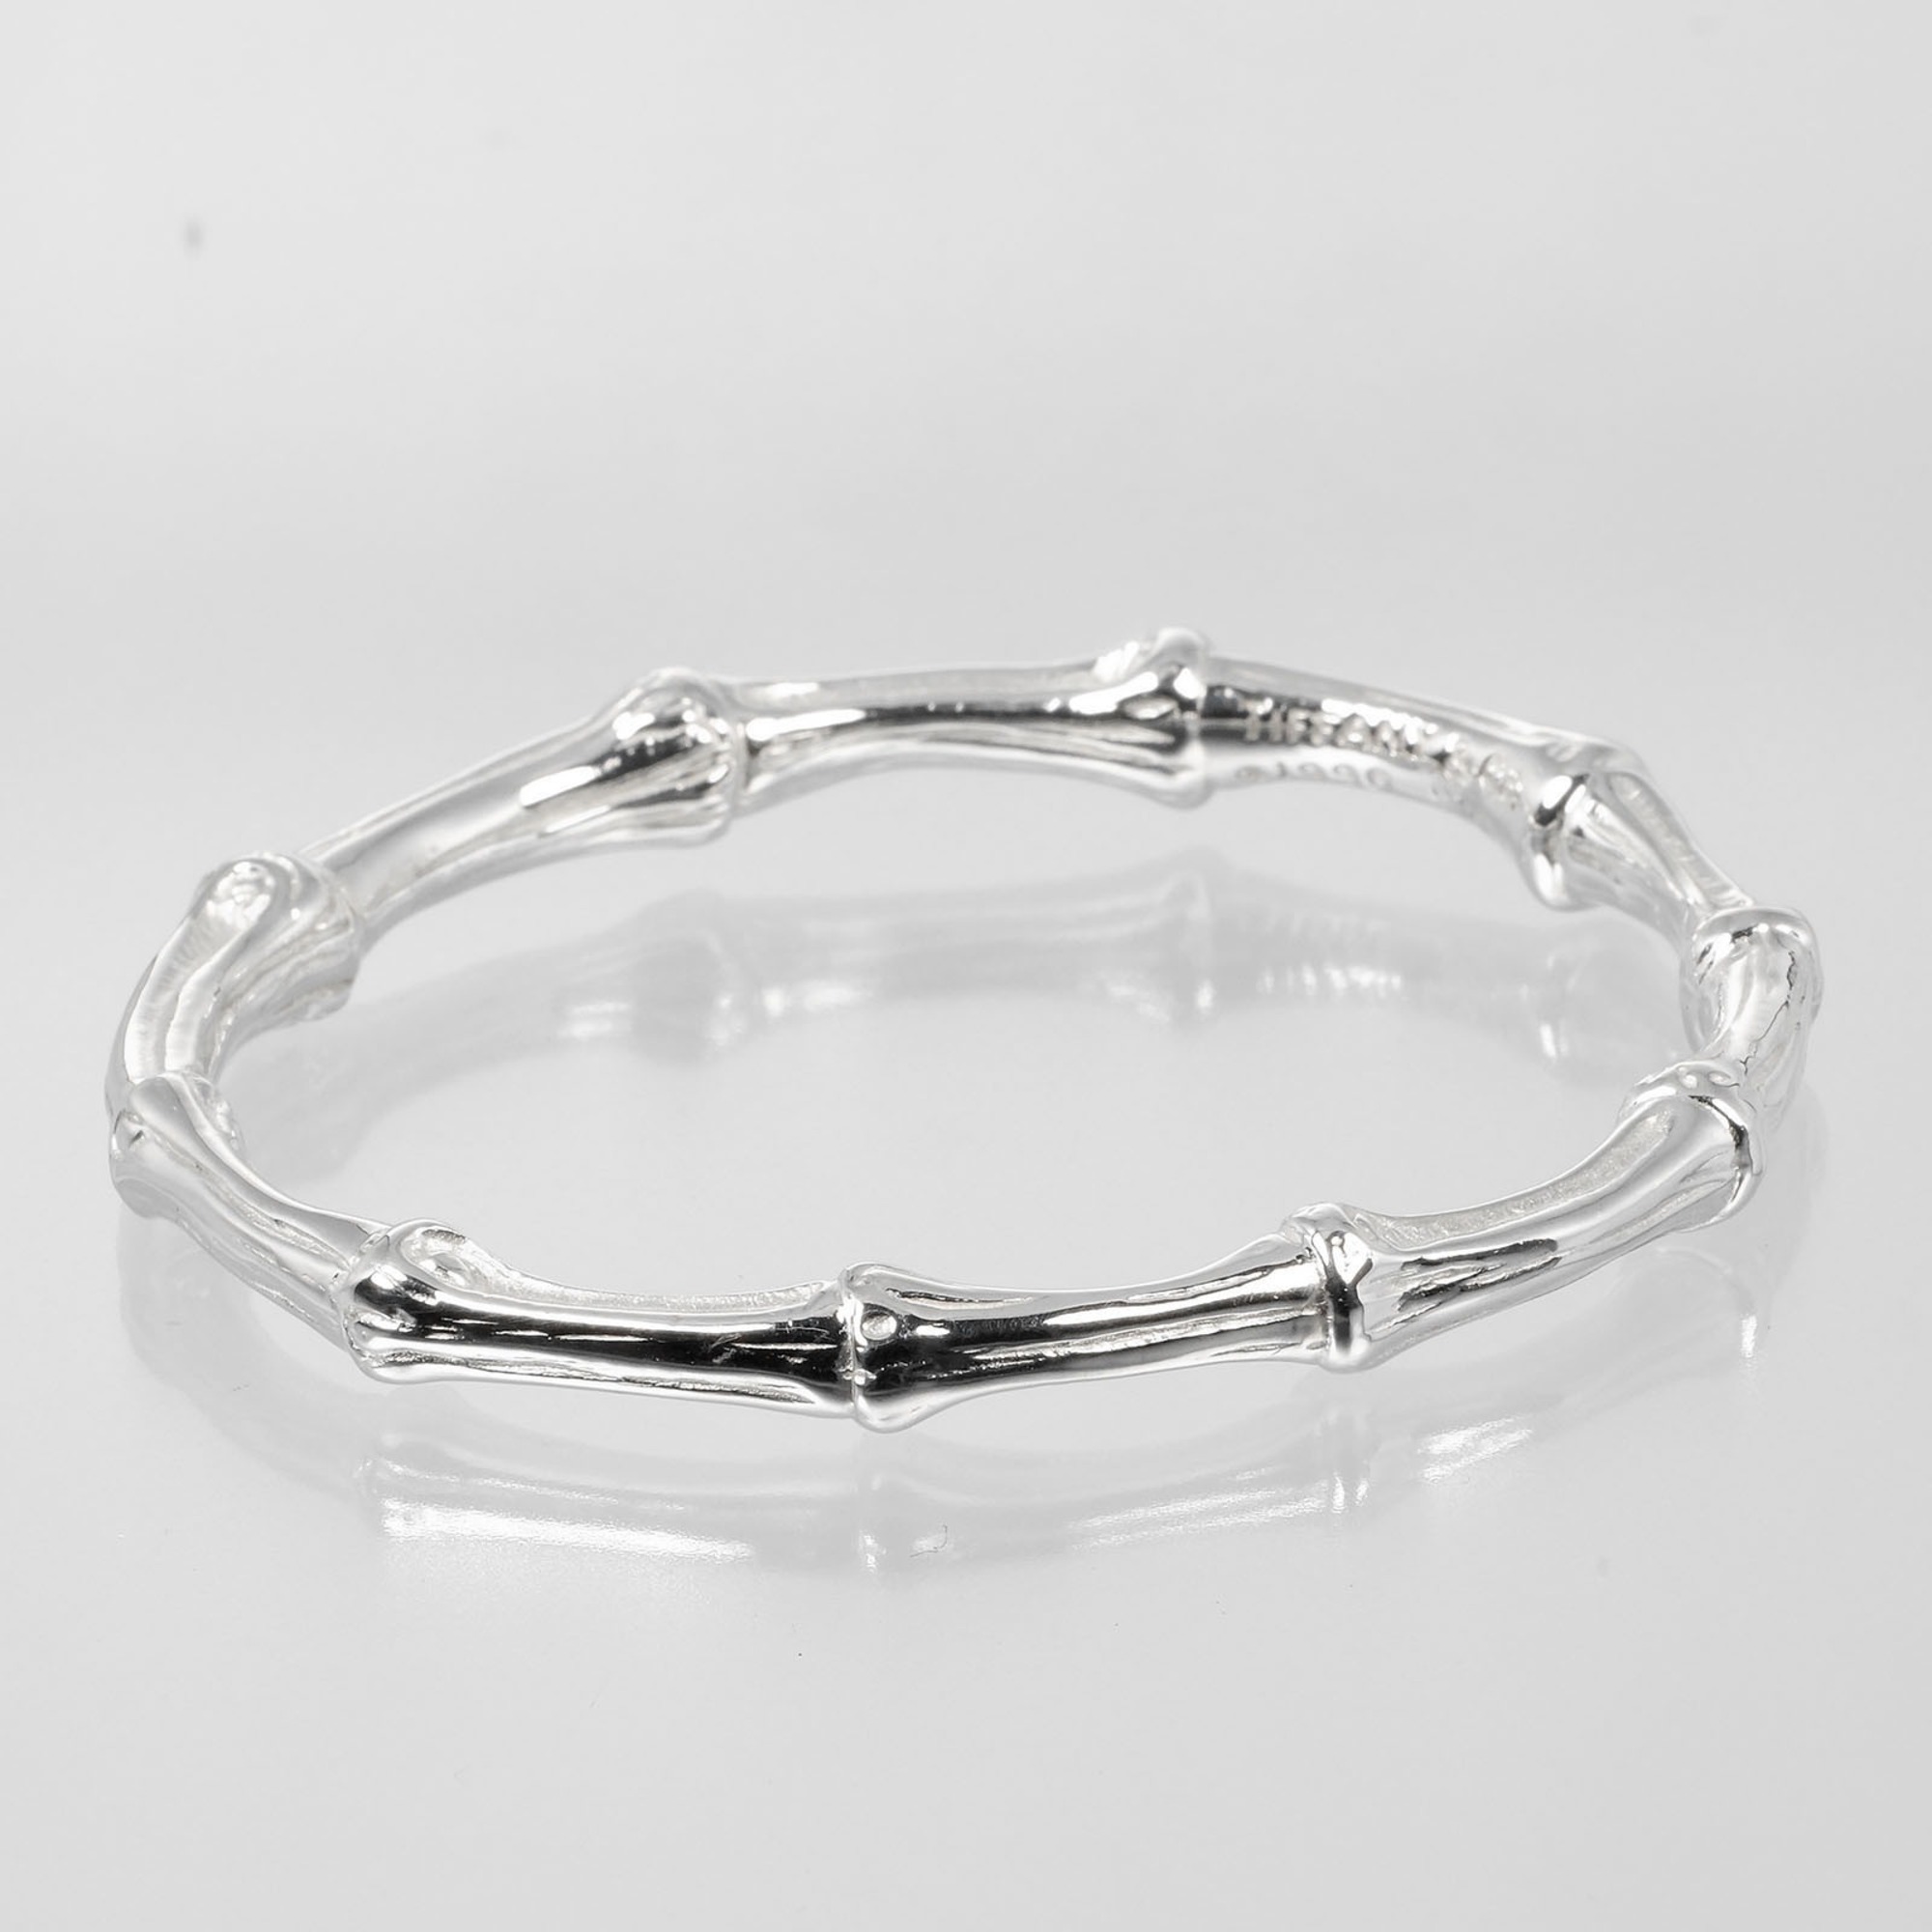 Tiffany & Co. Bamboo Bracelet, 17.5cm wrist size, bangle, 925 silver, approx. 40.5g I132724016